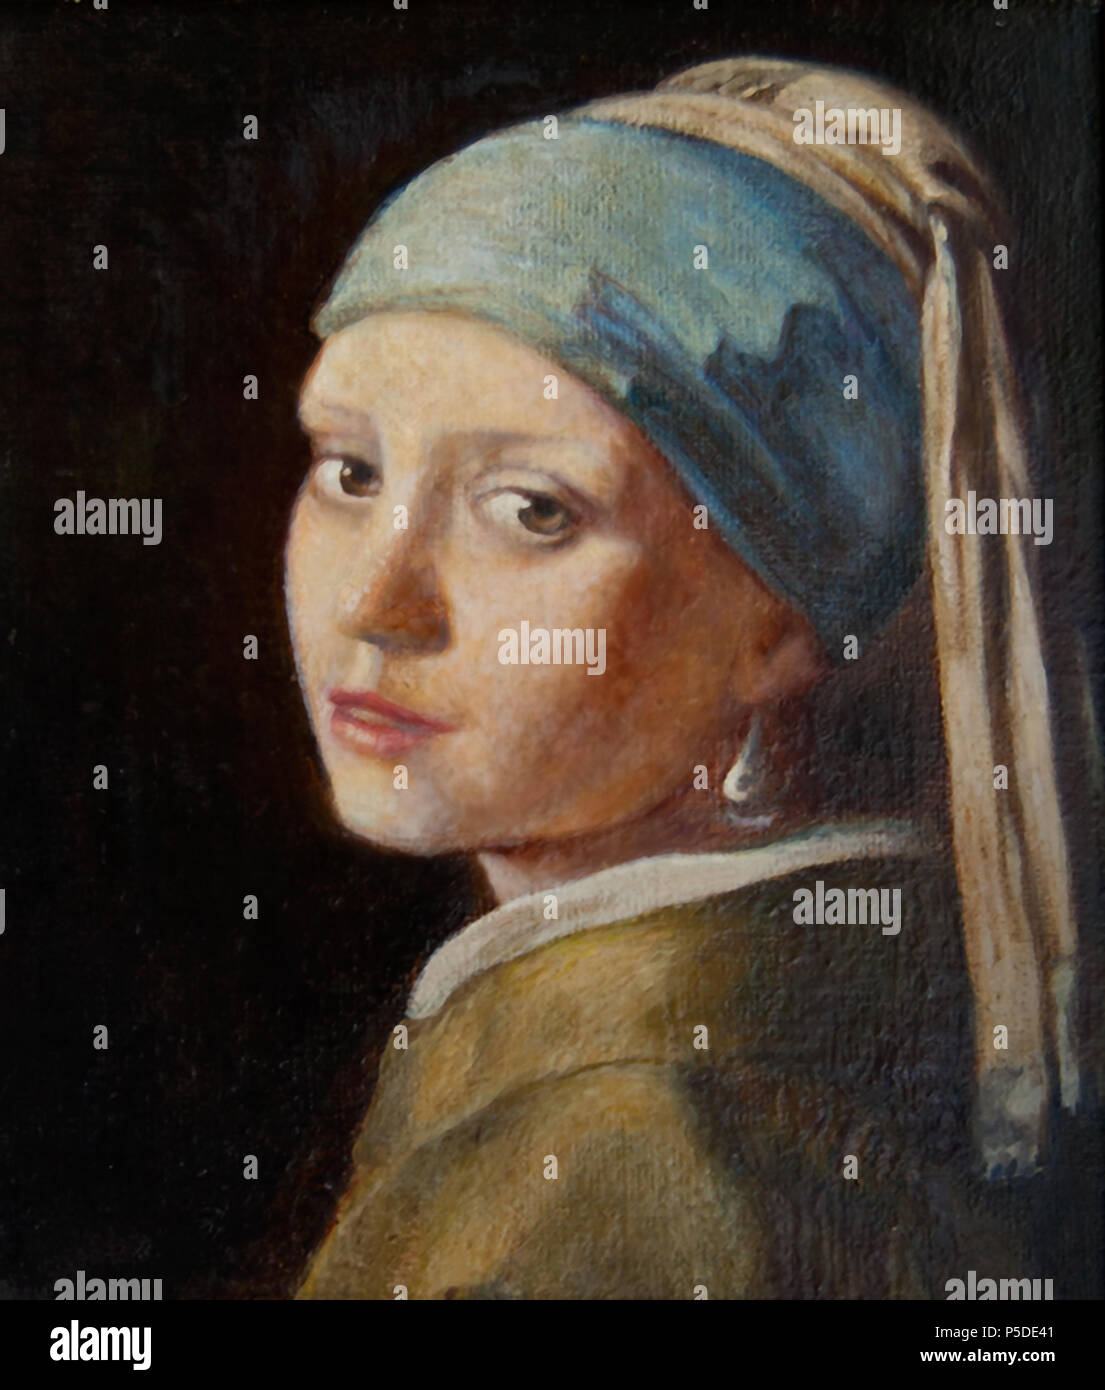 Johannes Vermeer Girl Pearl Earring Fotos e Imágenes de stock - Alamy